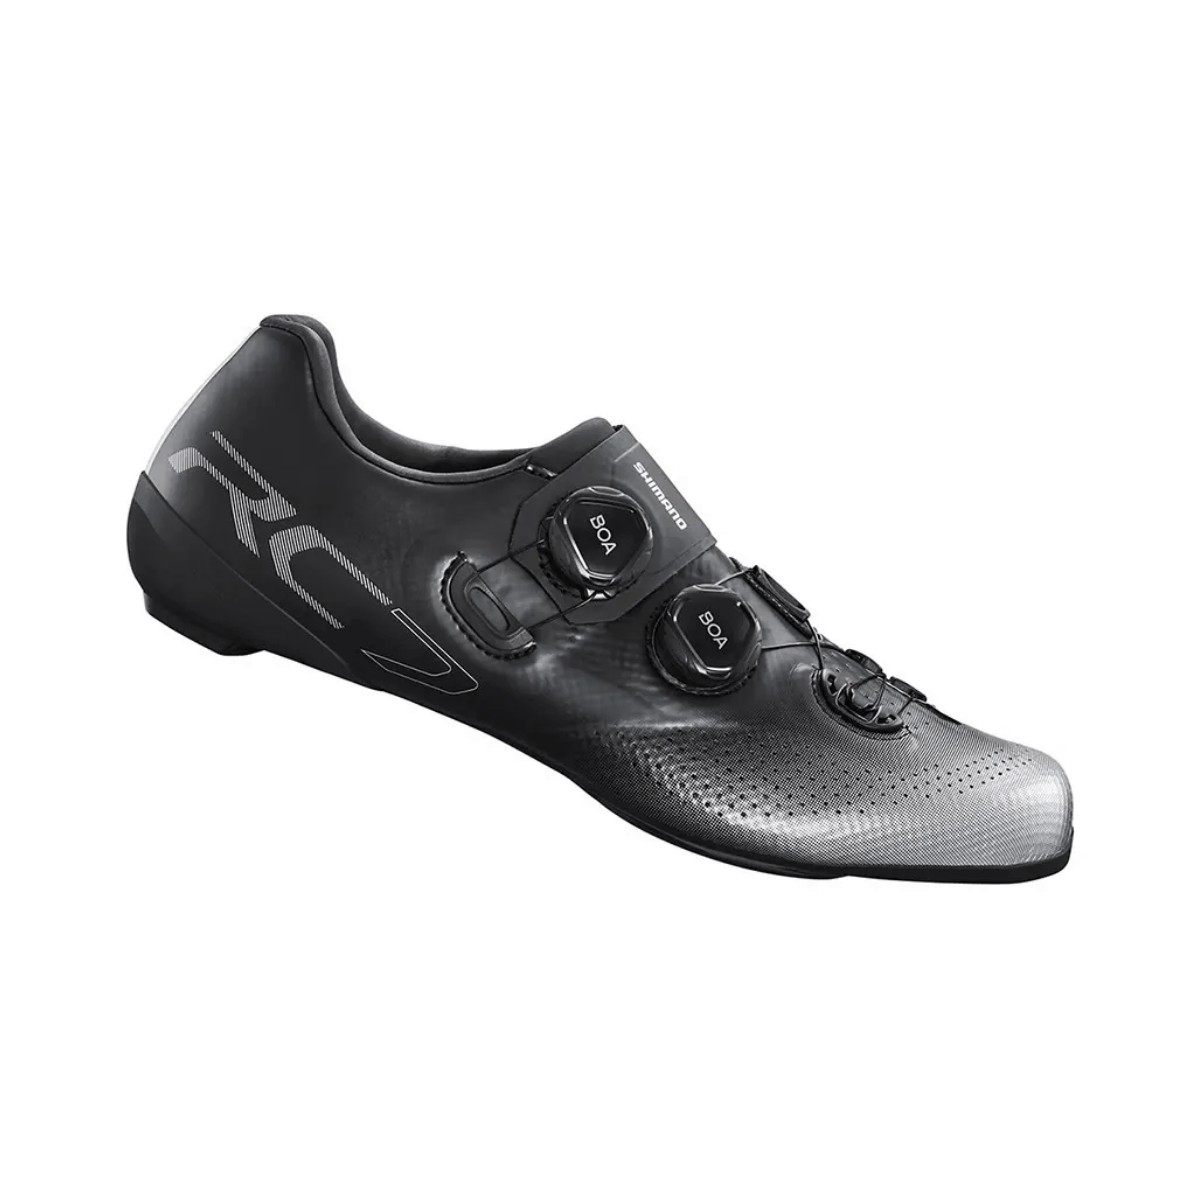 Shimano RC702 Shoes Wide Black, Size 44 - EUR